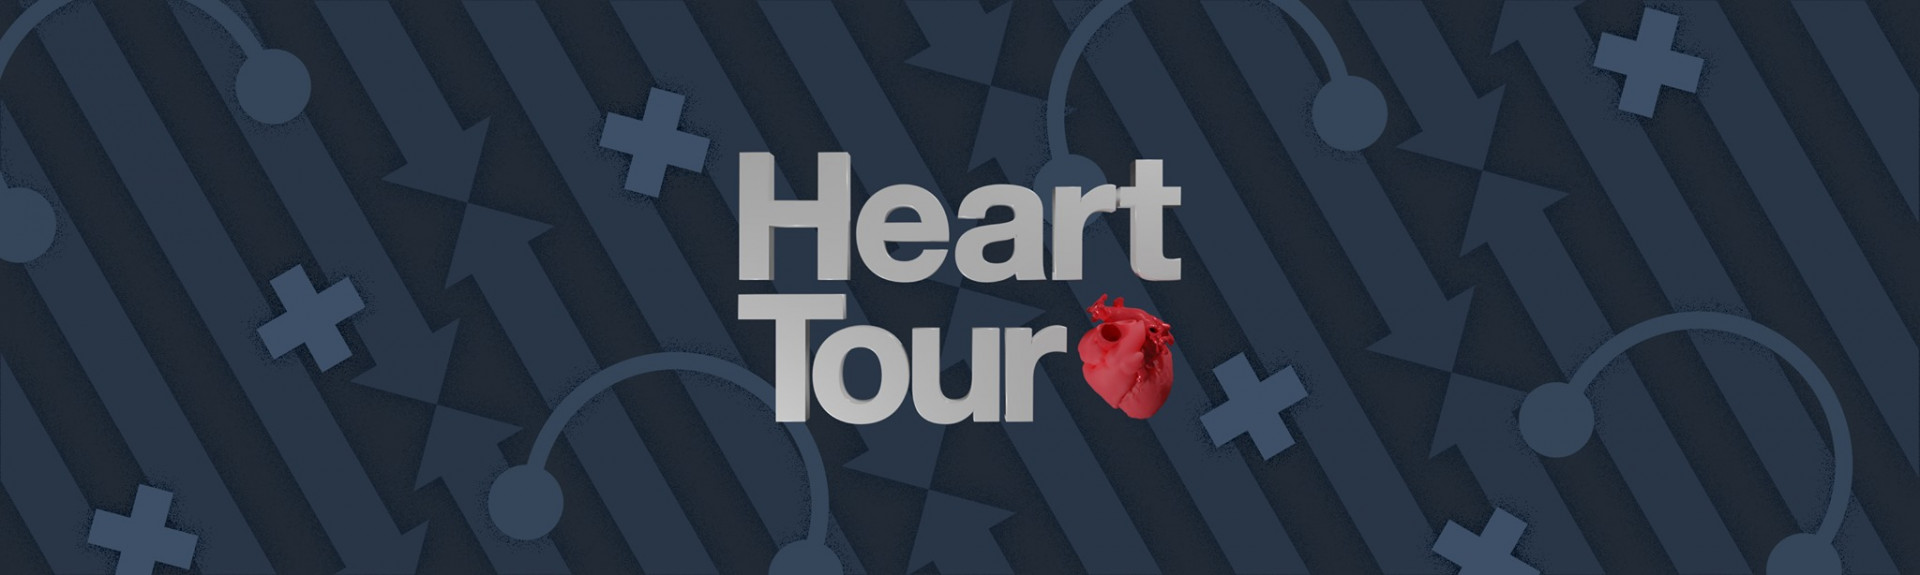 Heart Tour